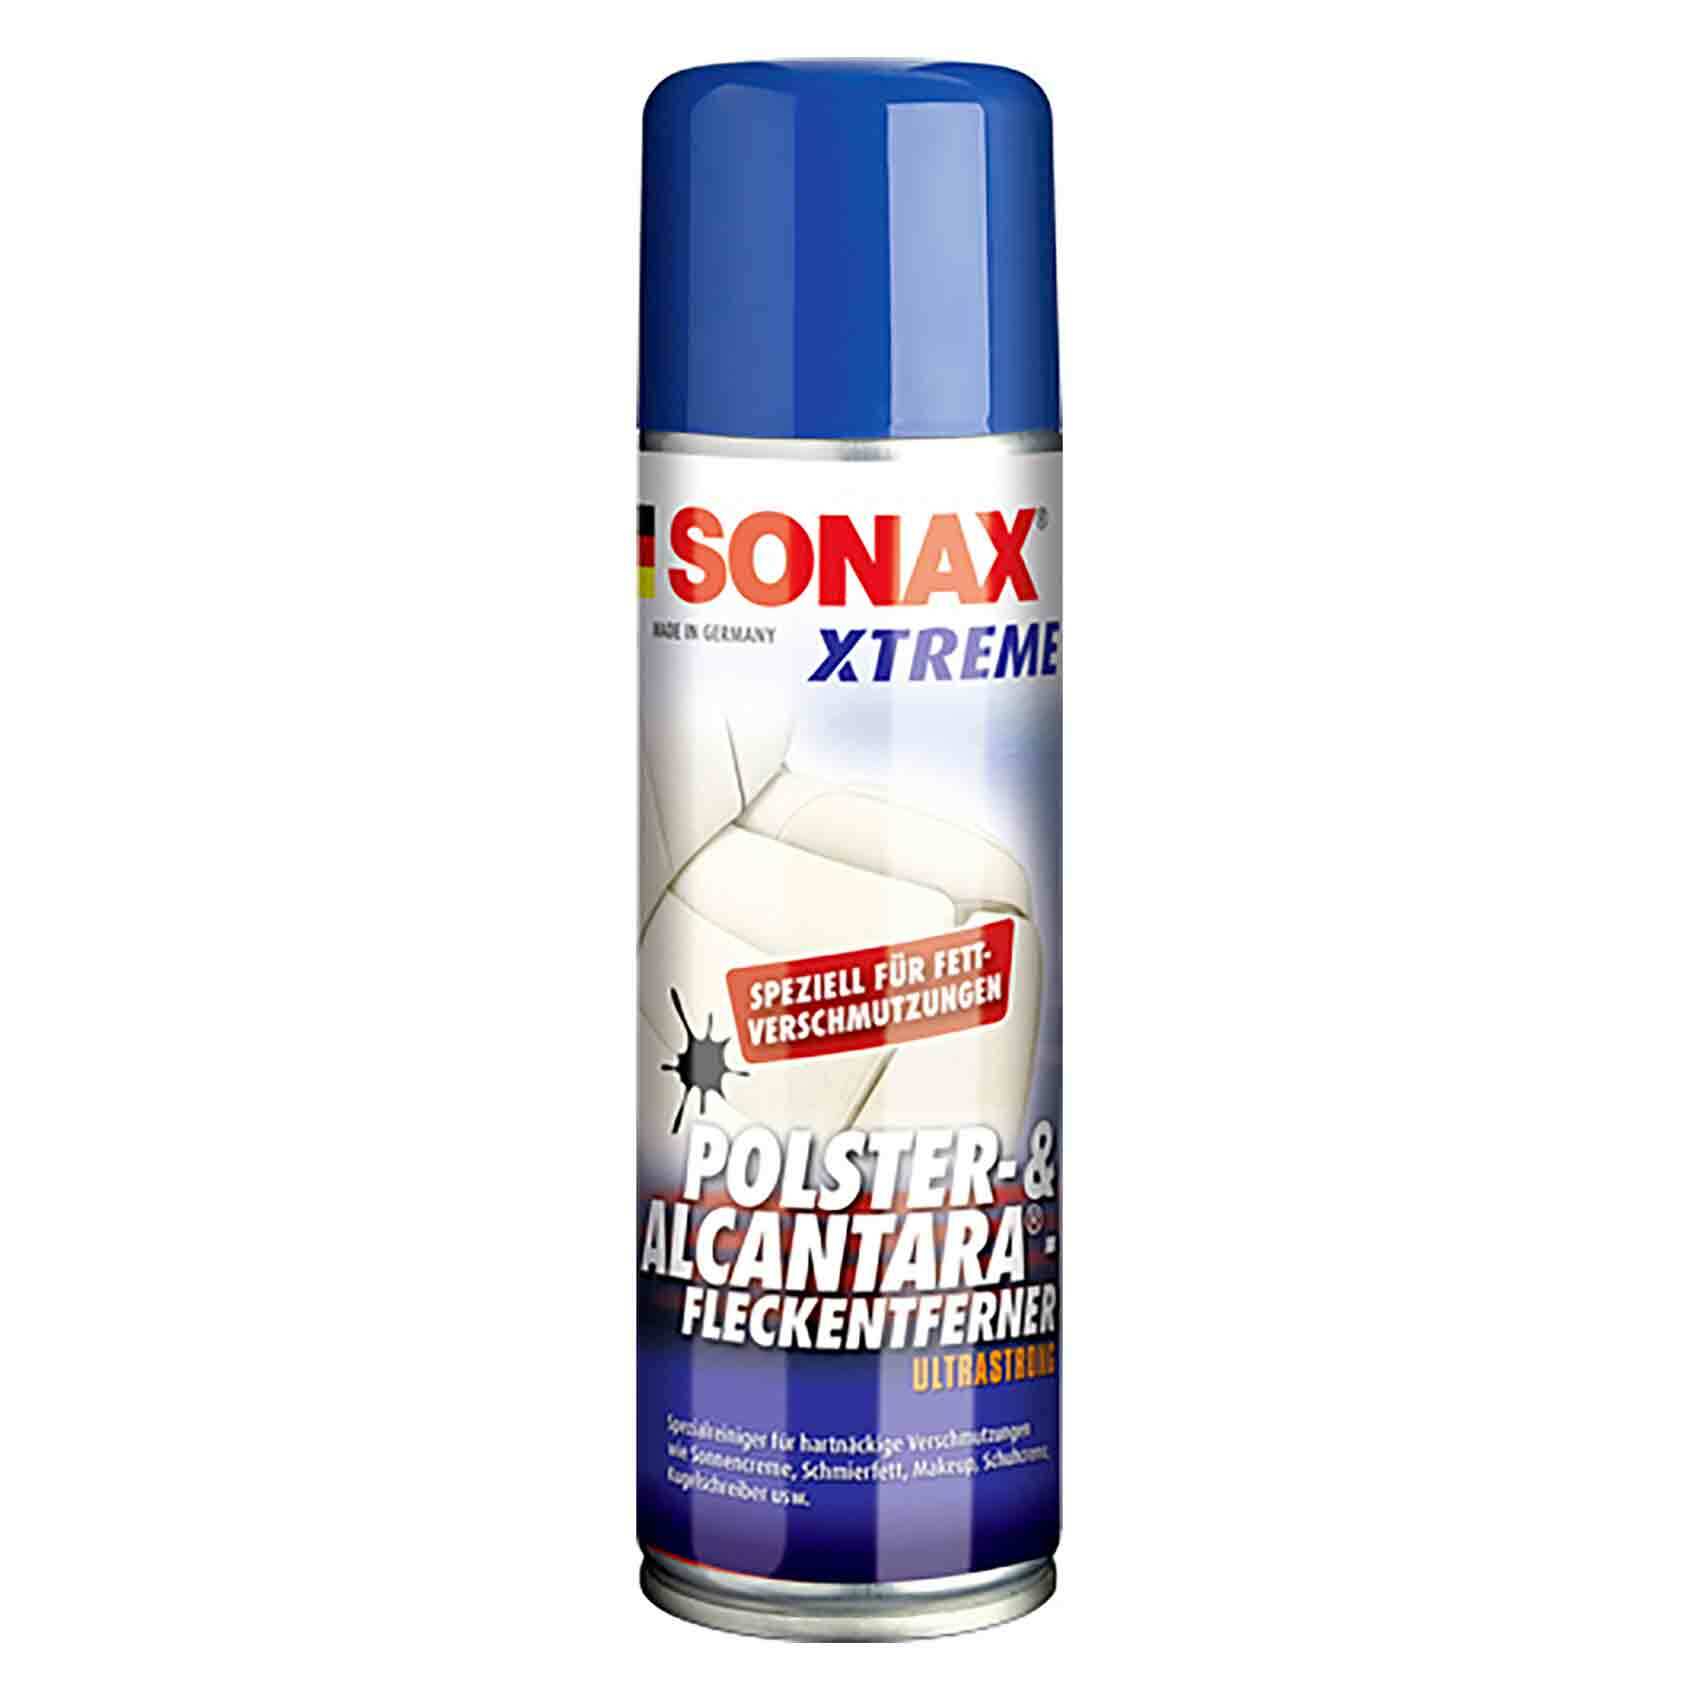 Buy Sonax Xtreme Fabric Alcantara Stain Remover 300 Ml Online - Shop Automotive on Jordan